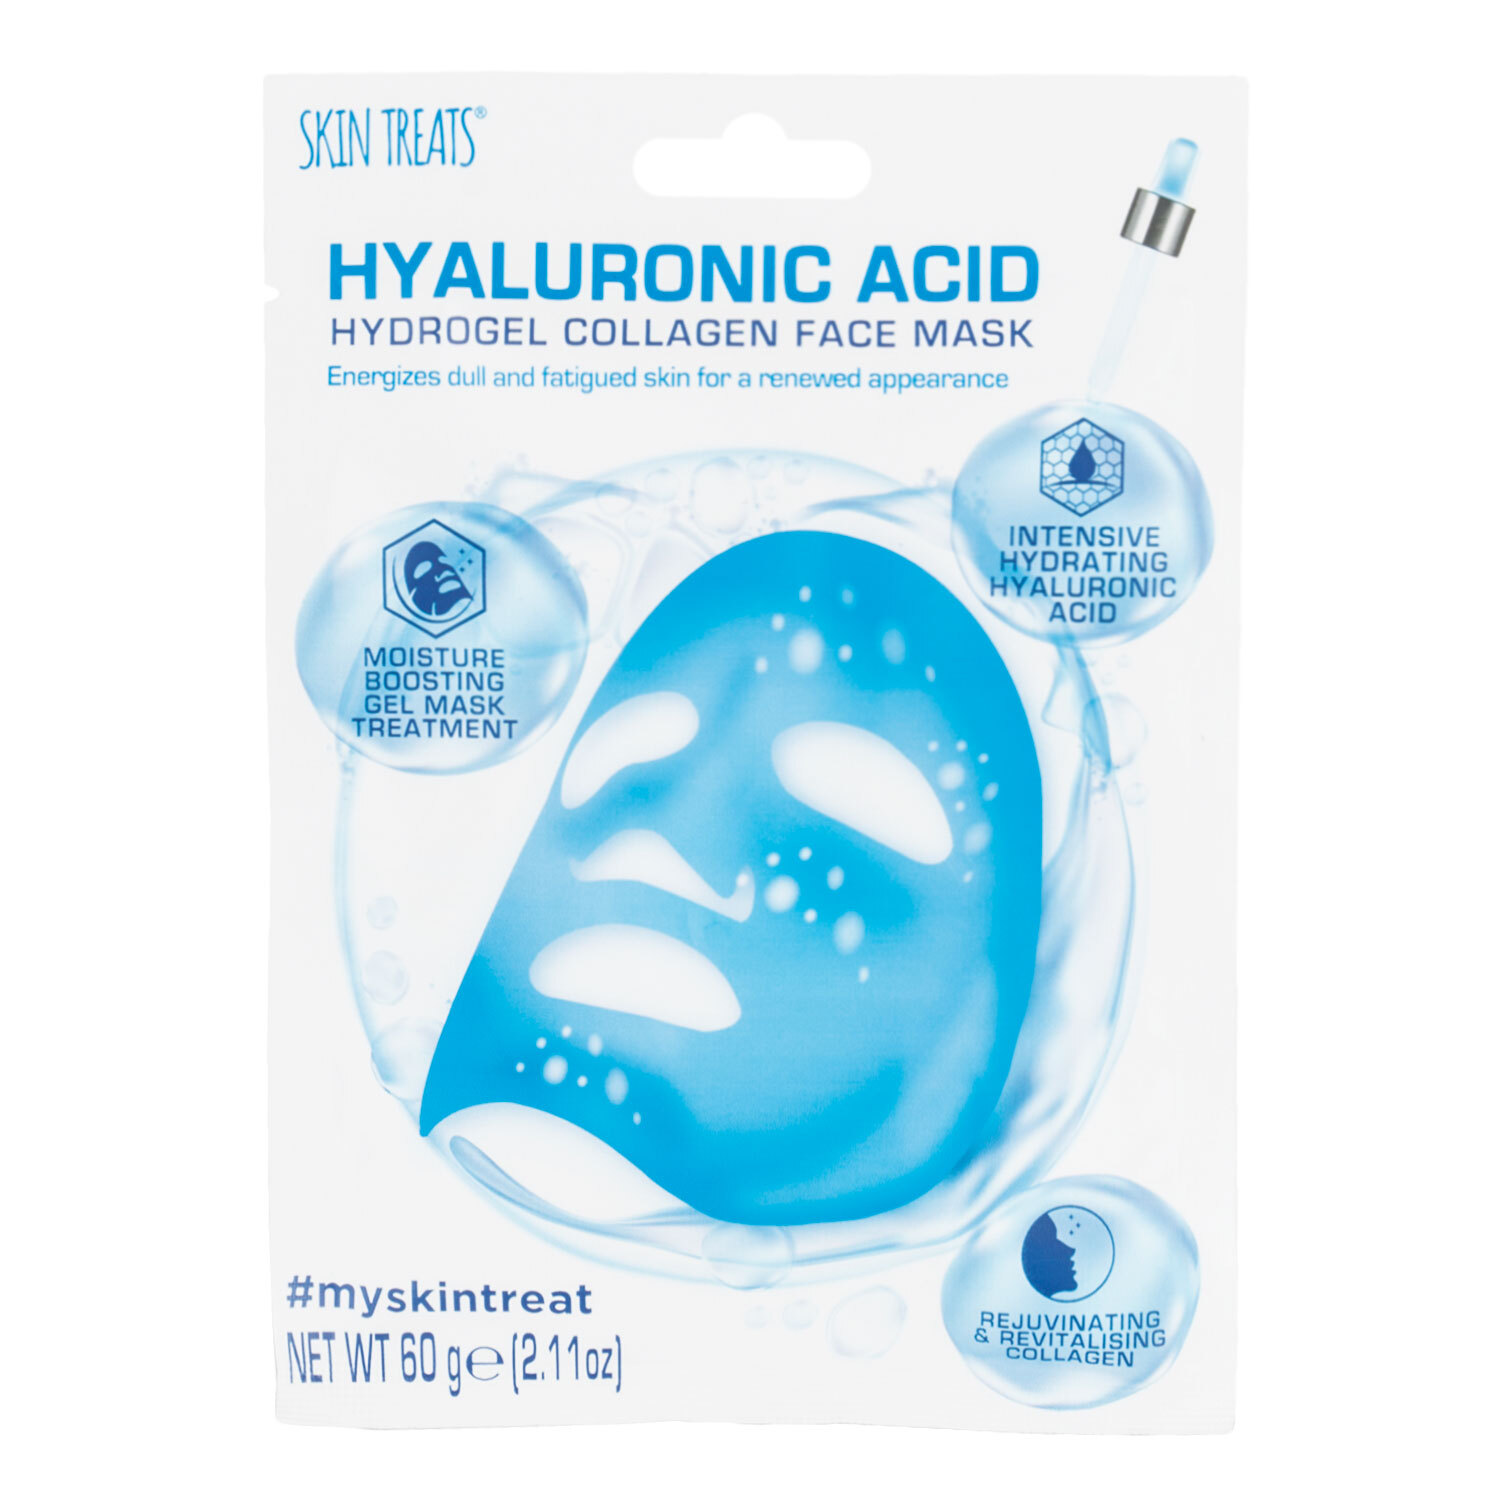 Skin Treats Hyaluronic Acid Hydrogel Collagen Face Mask Image